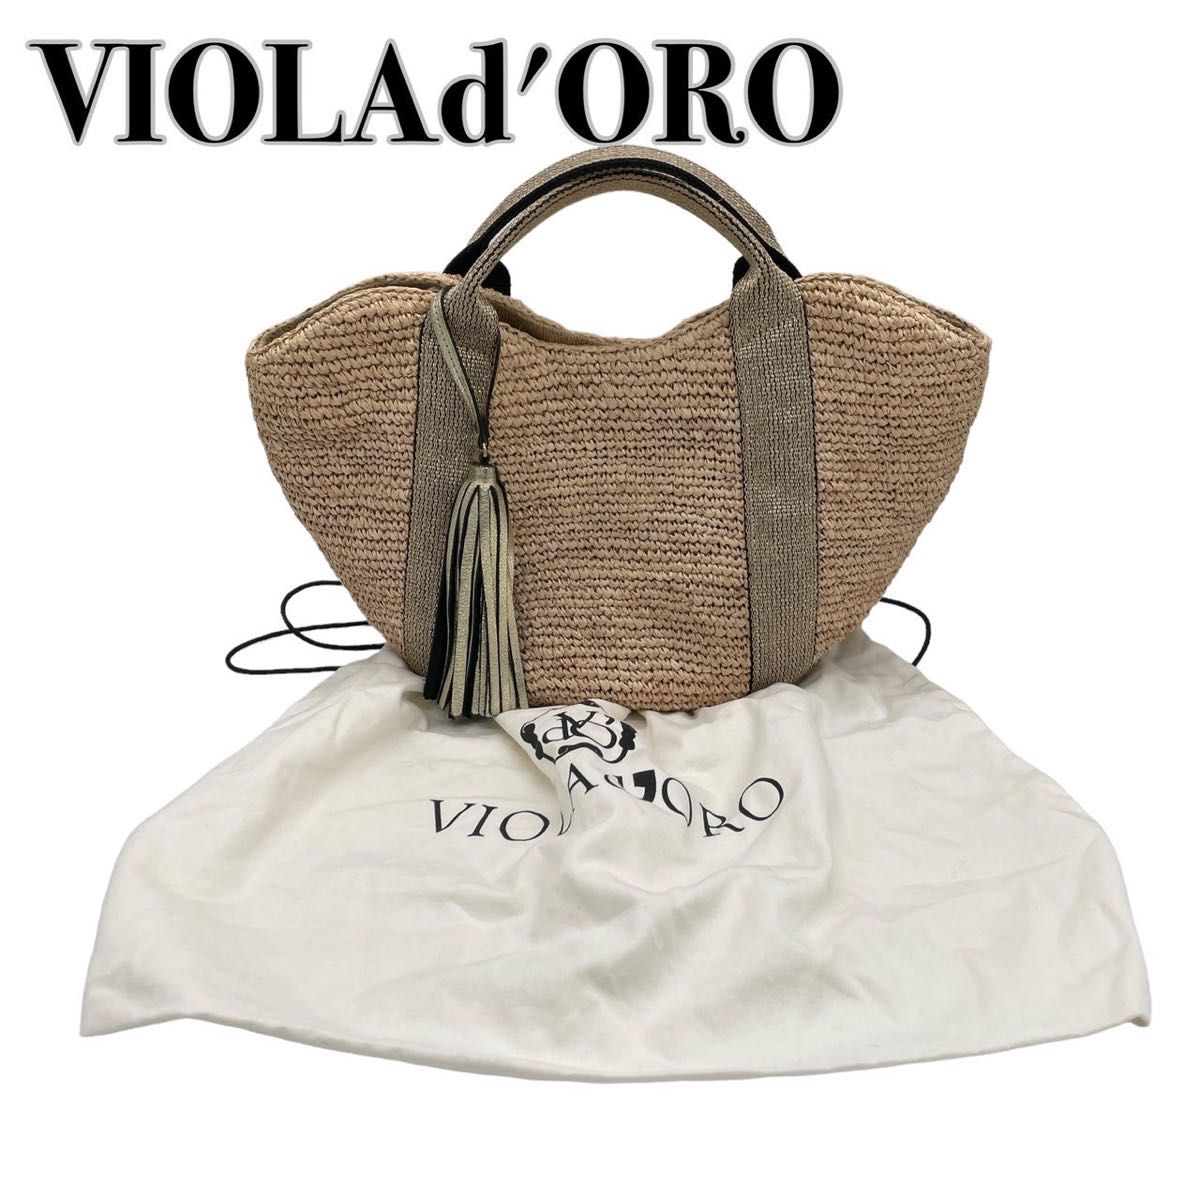 VIOLAd'OROヴィオラドーロ  ラフィアトートバッグかごバッグ 保存袋付き フリンジ ラメ